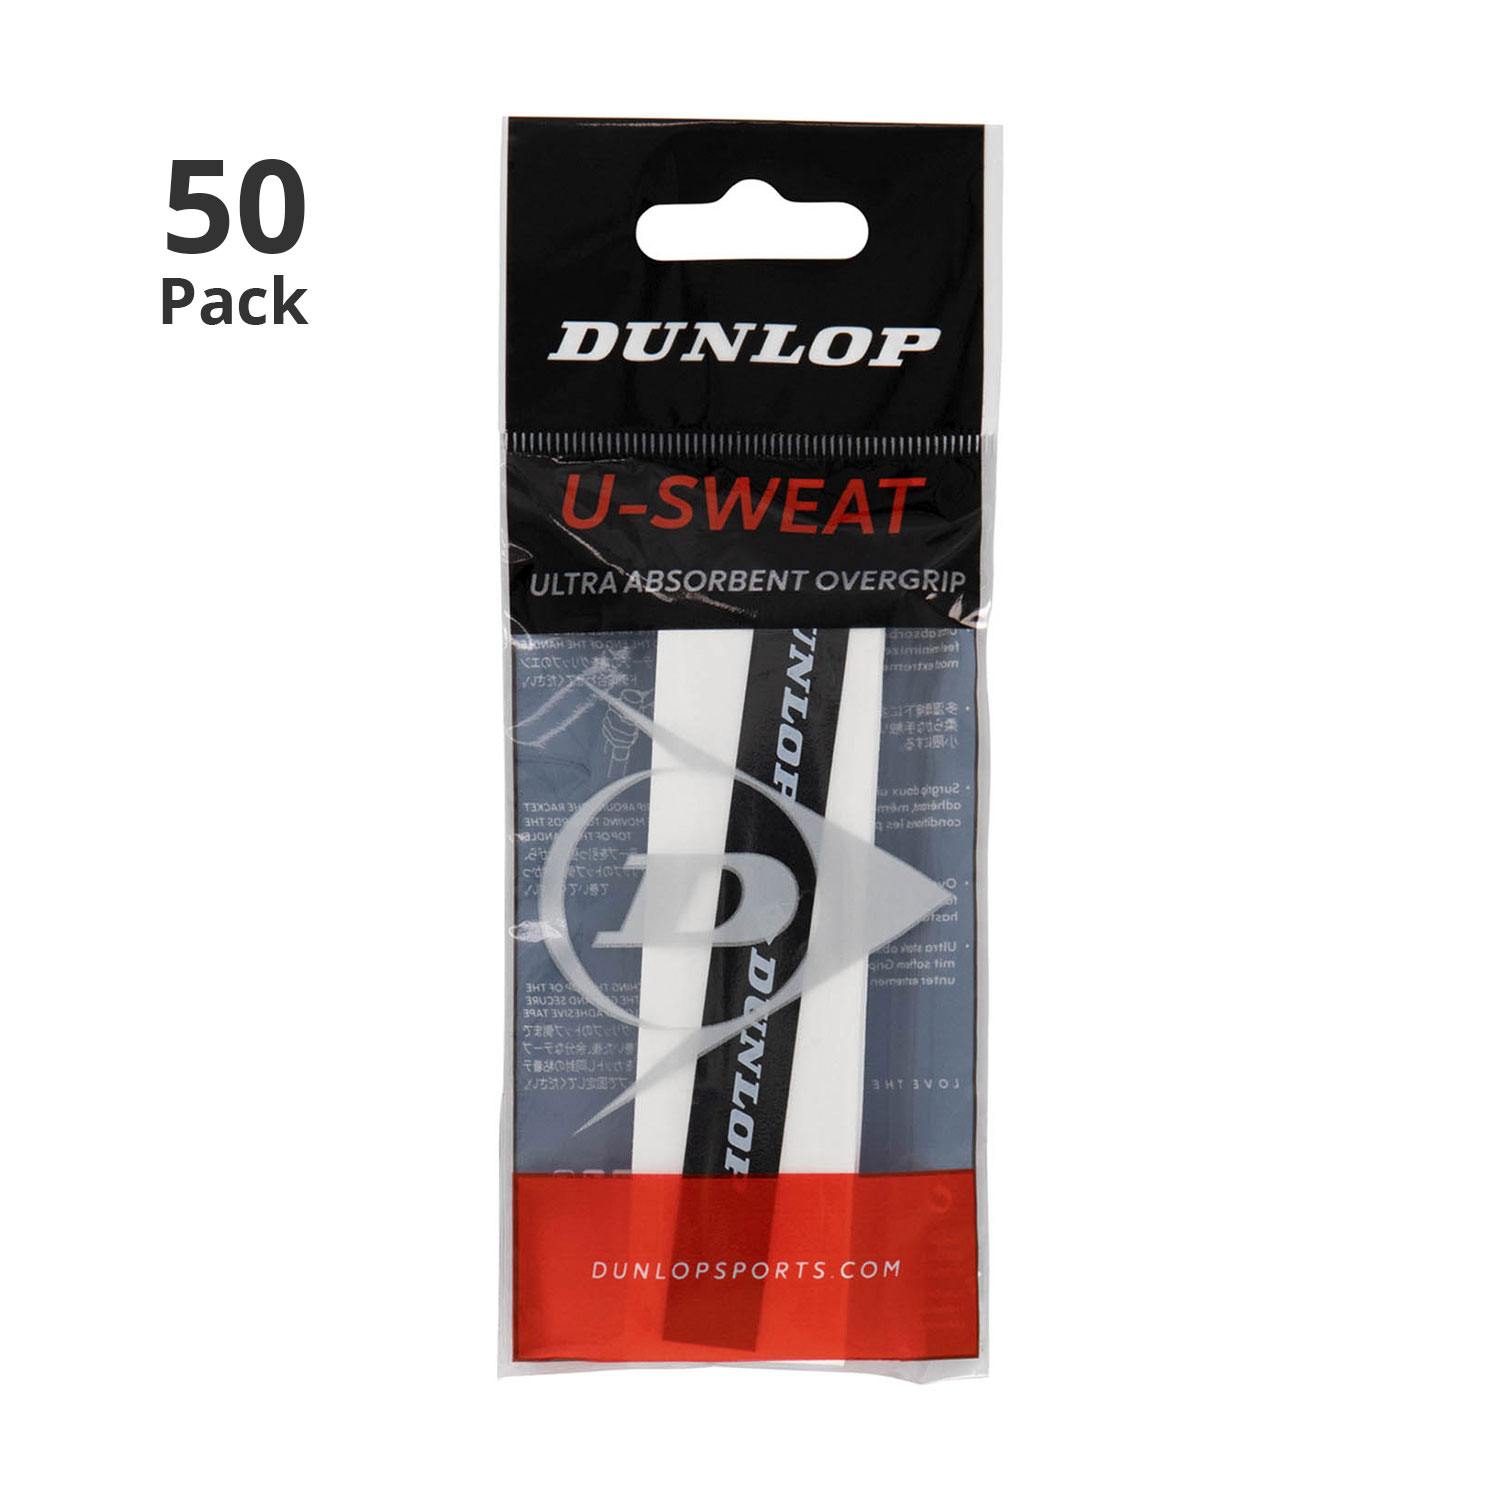 Dunlop U-Sweat Overgrip x 50 Pack - White